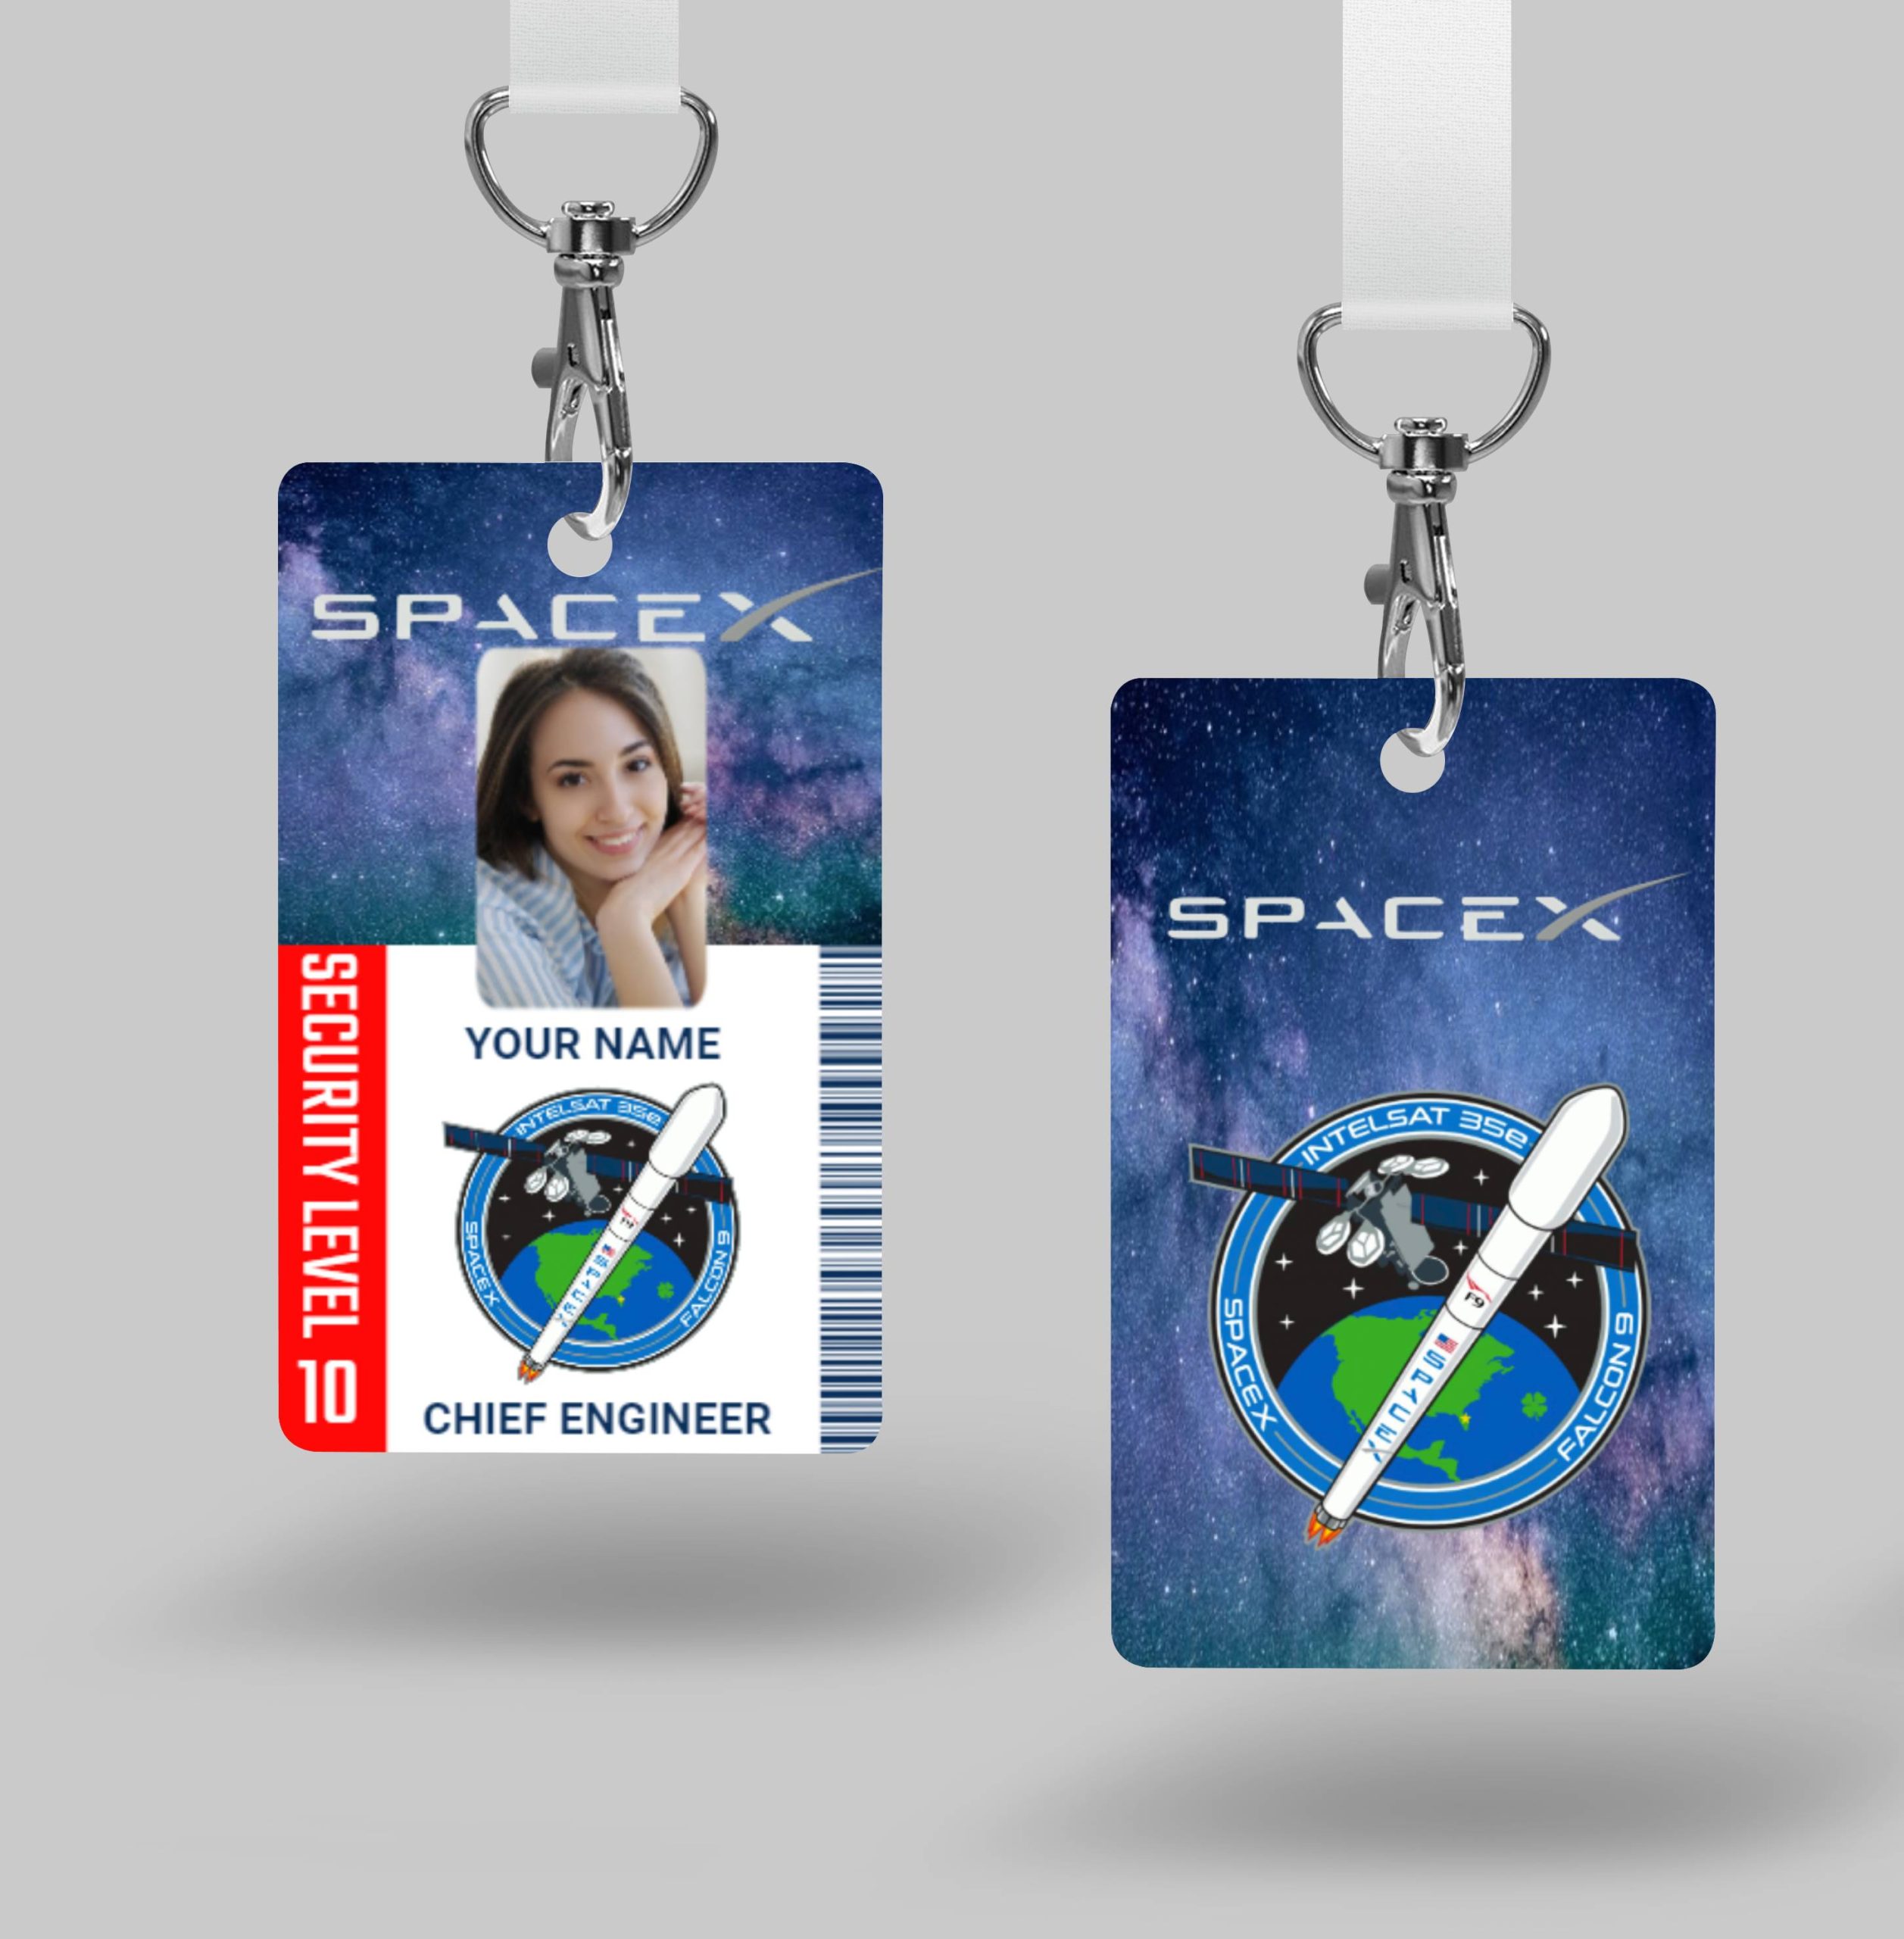 SpaceX Cosplay ID card V1.